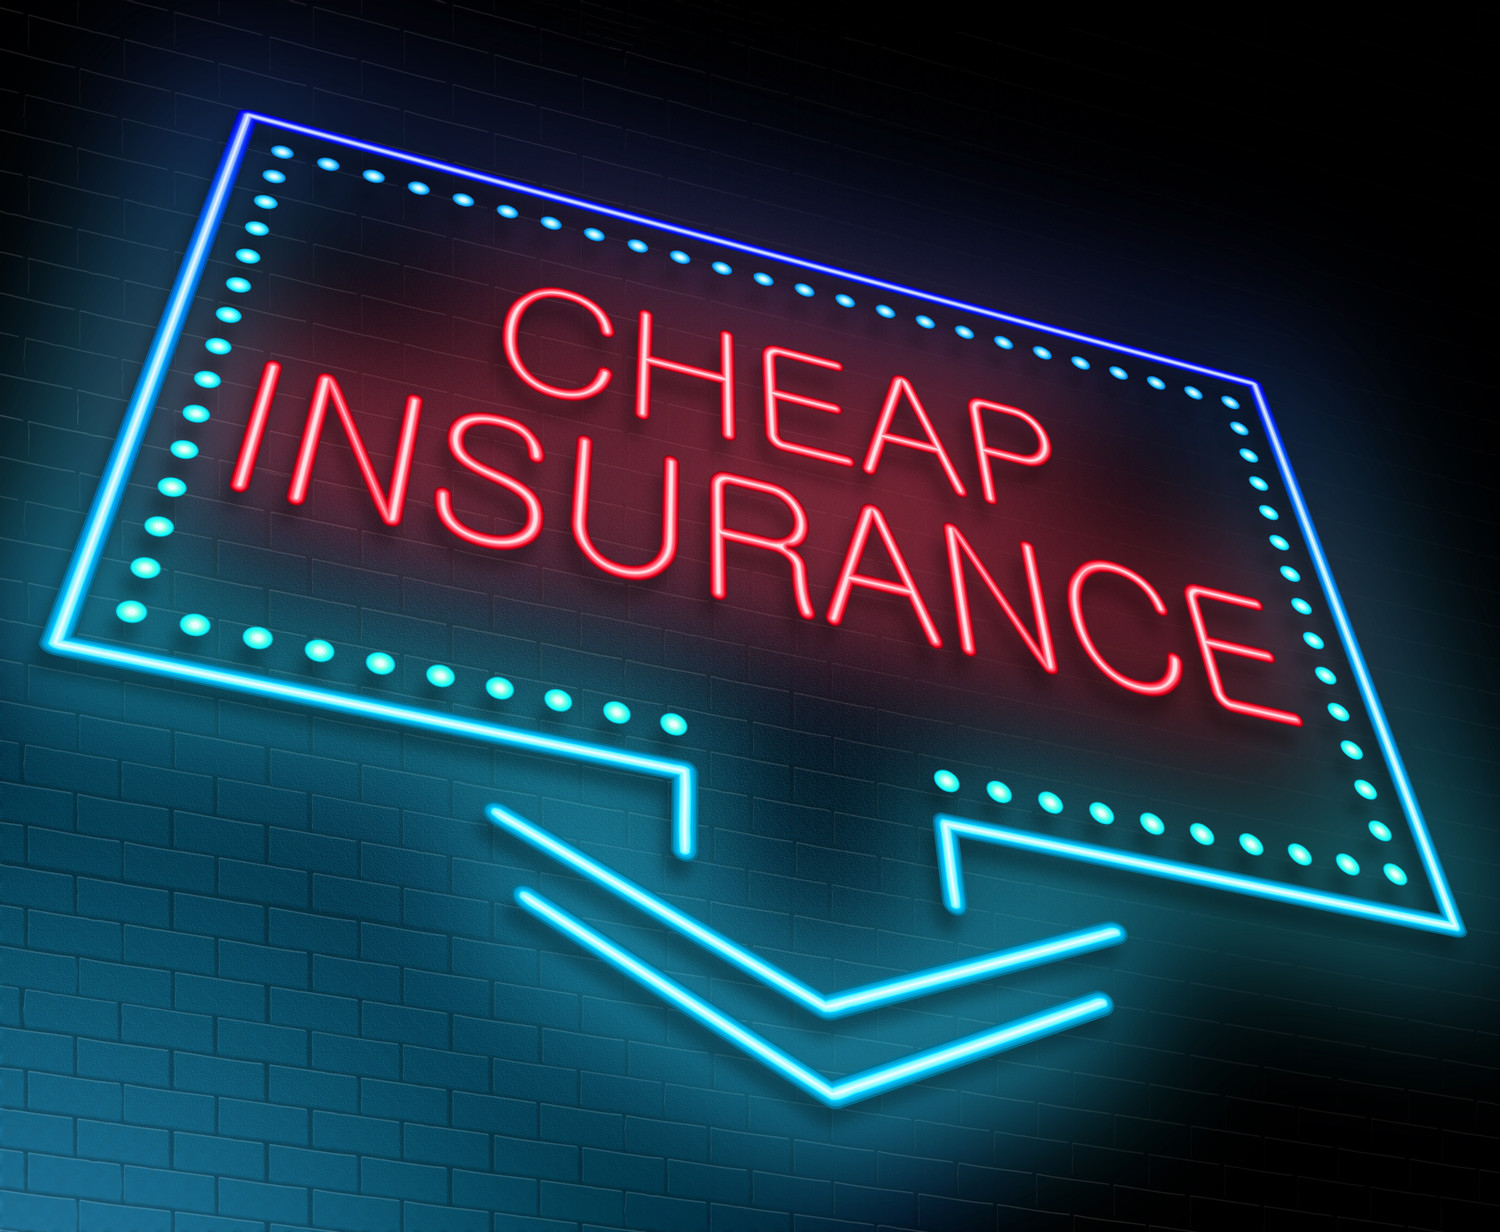 Cheap Insurance